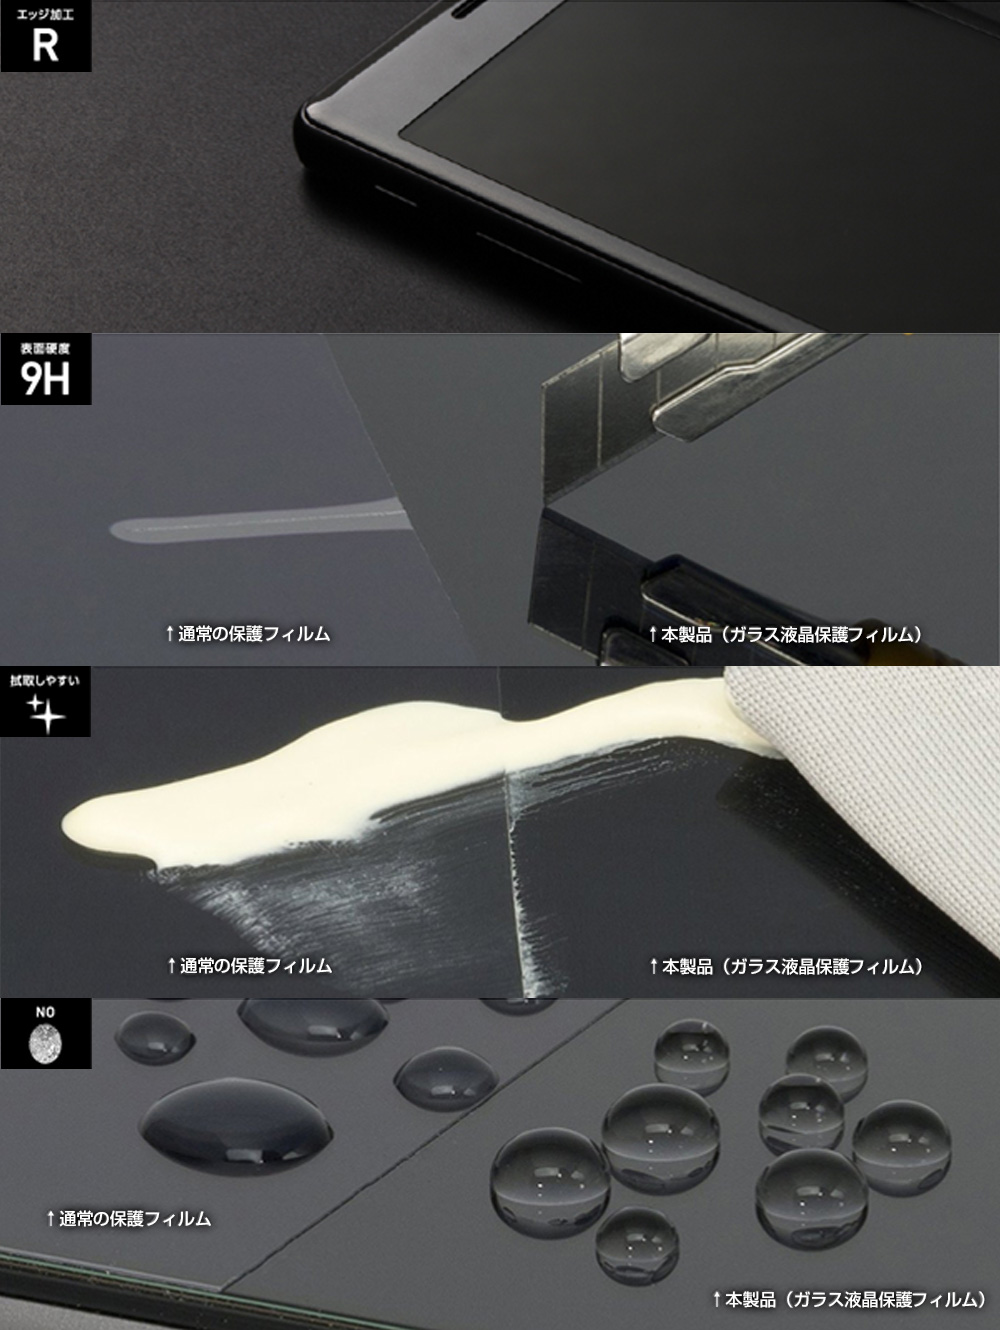 High Grade Glass Screen Protector ϥ졼ɥ饹 for iPhone 13 mini Ʃꥢ